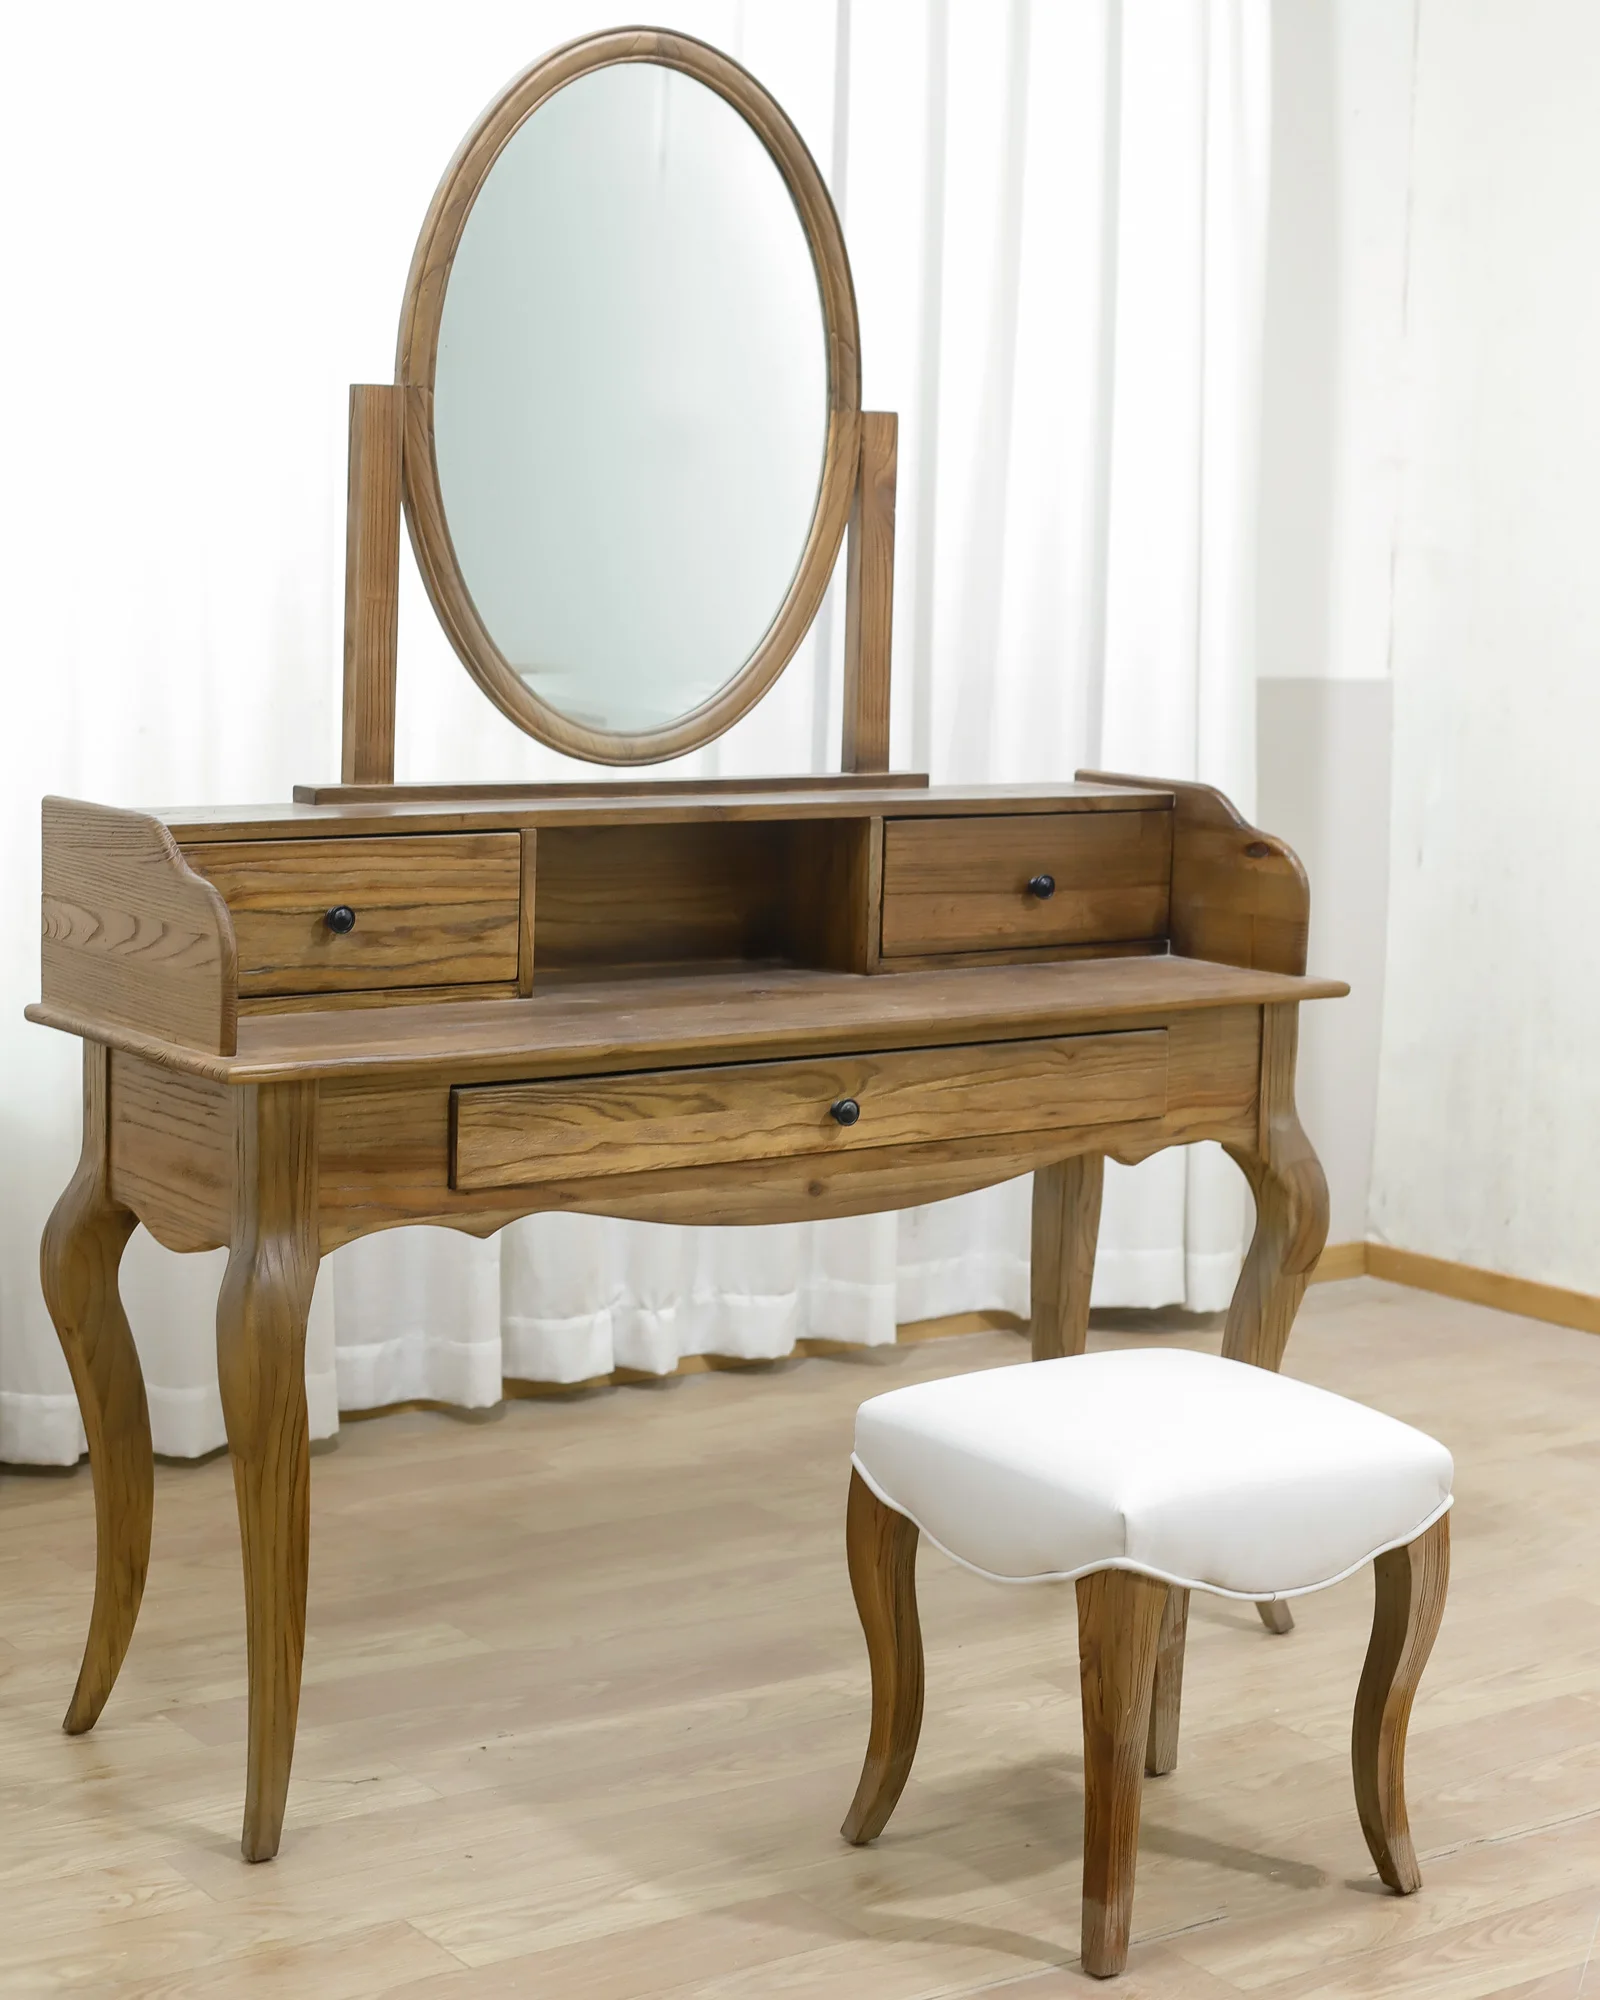 
European Style Bedroom furniture Antique Makeup Vanity Dresser Desk with mirror and stool 